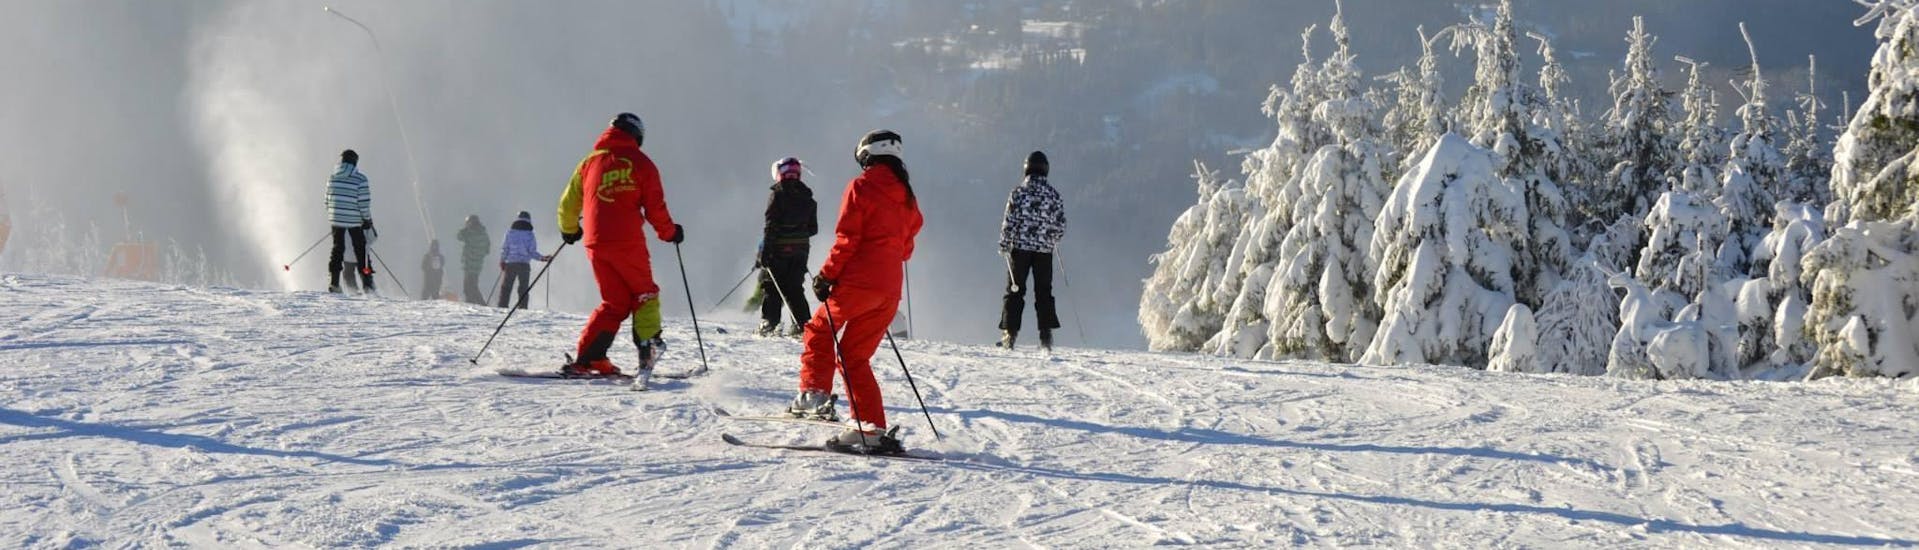 Lezioni di sci per adulti a partire da 12 anni per tutti i livelli.